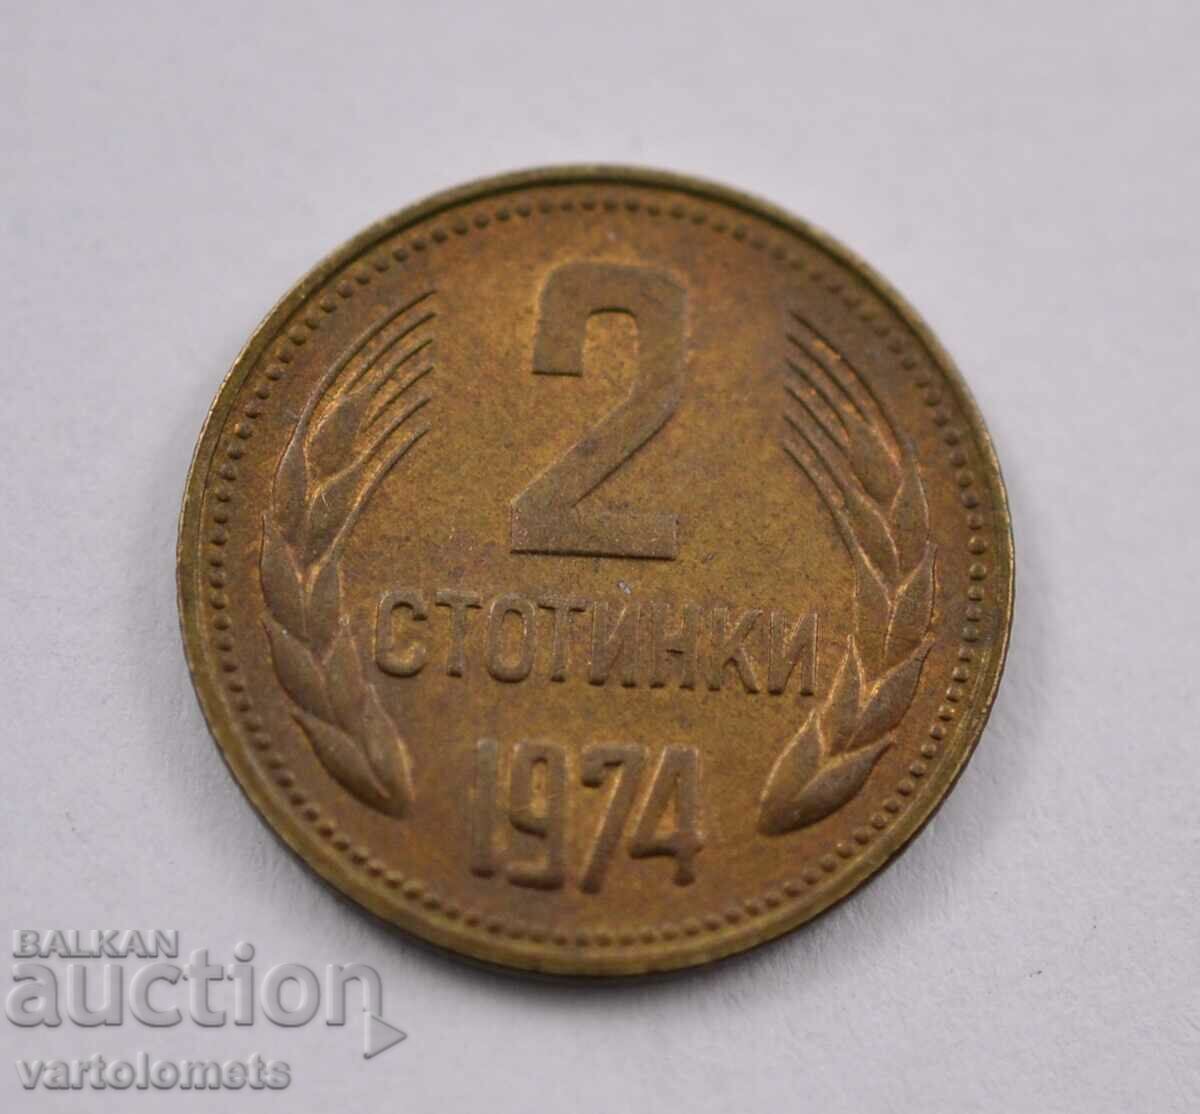 2 Cents 1974 - Bulgaria